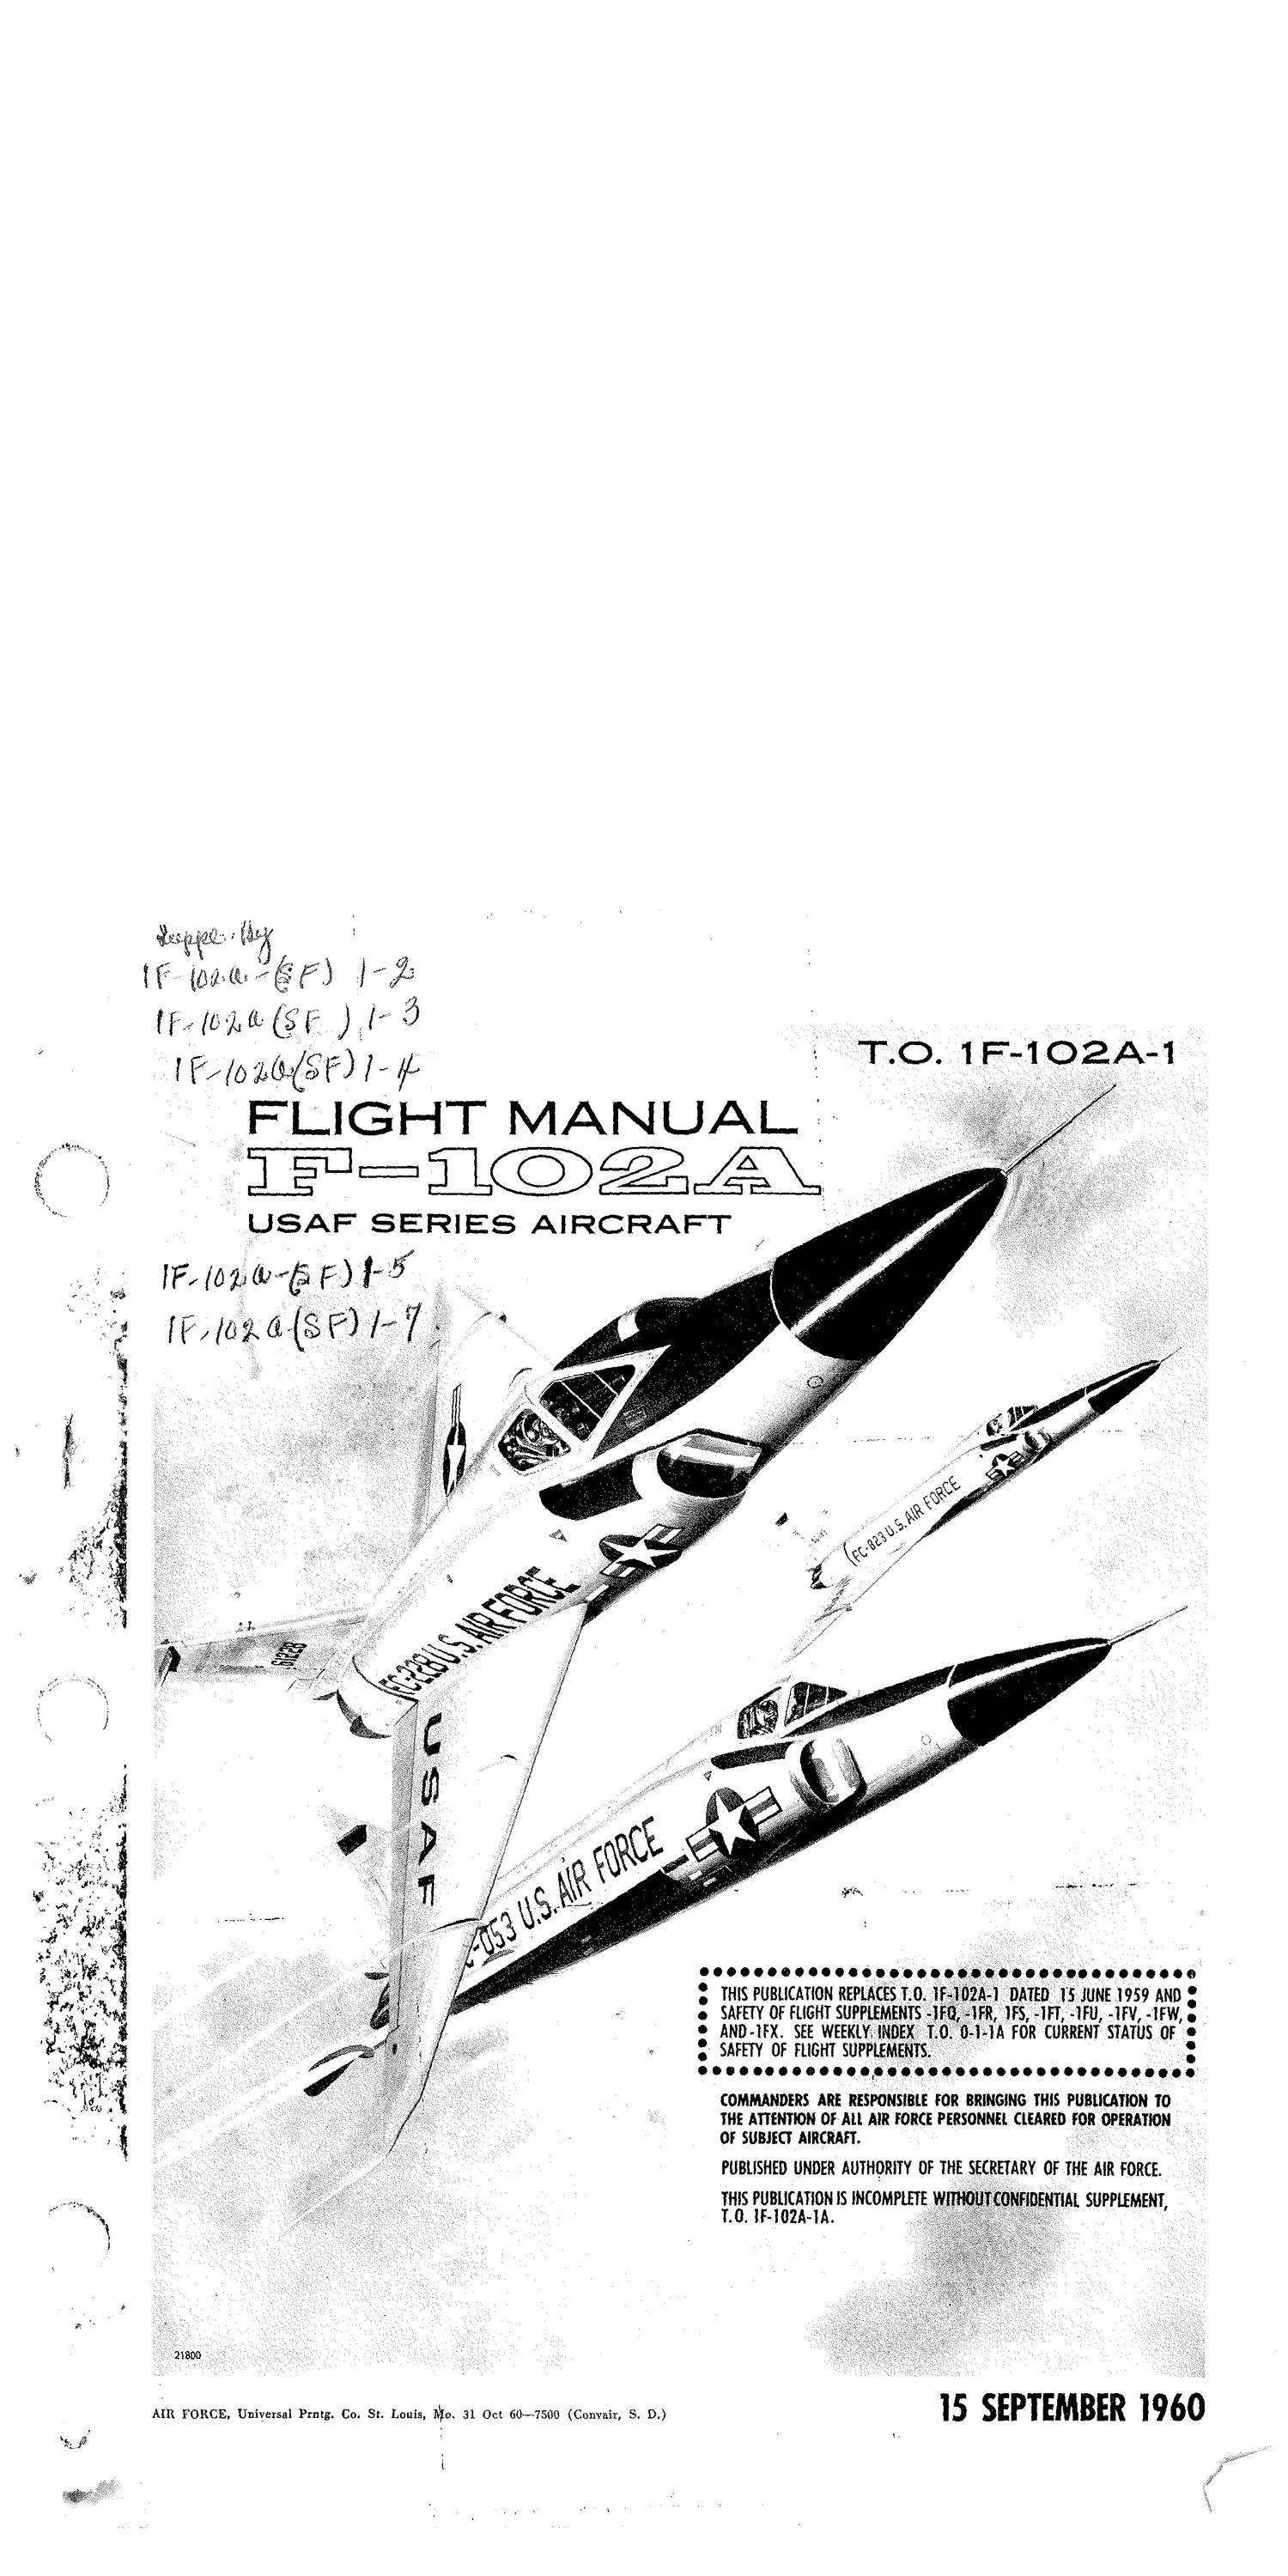 CD CONVAIR F-102A FLIGHT TRAINING MANUAL 